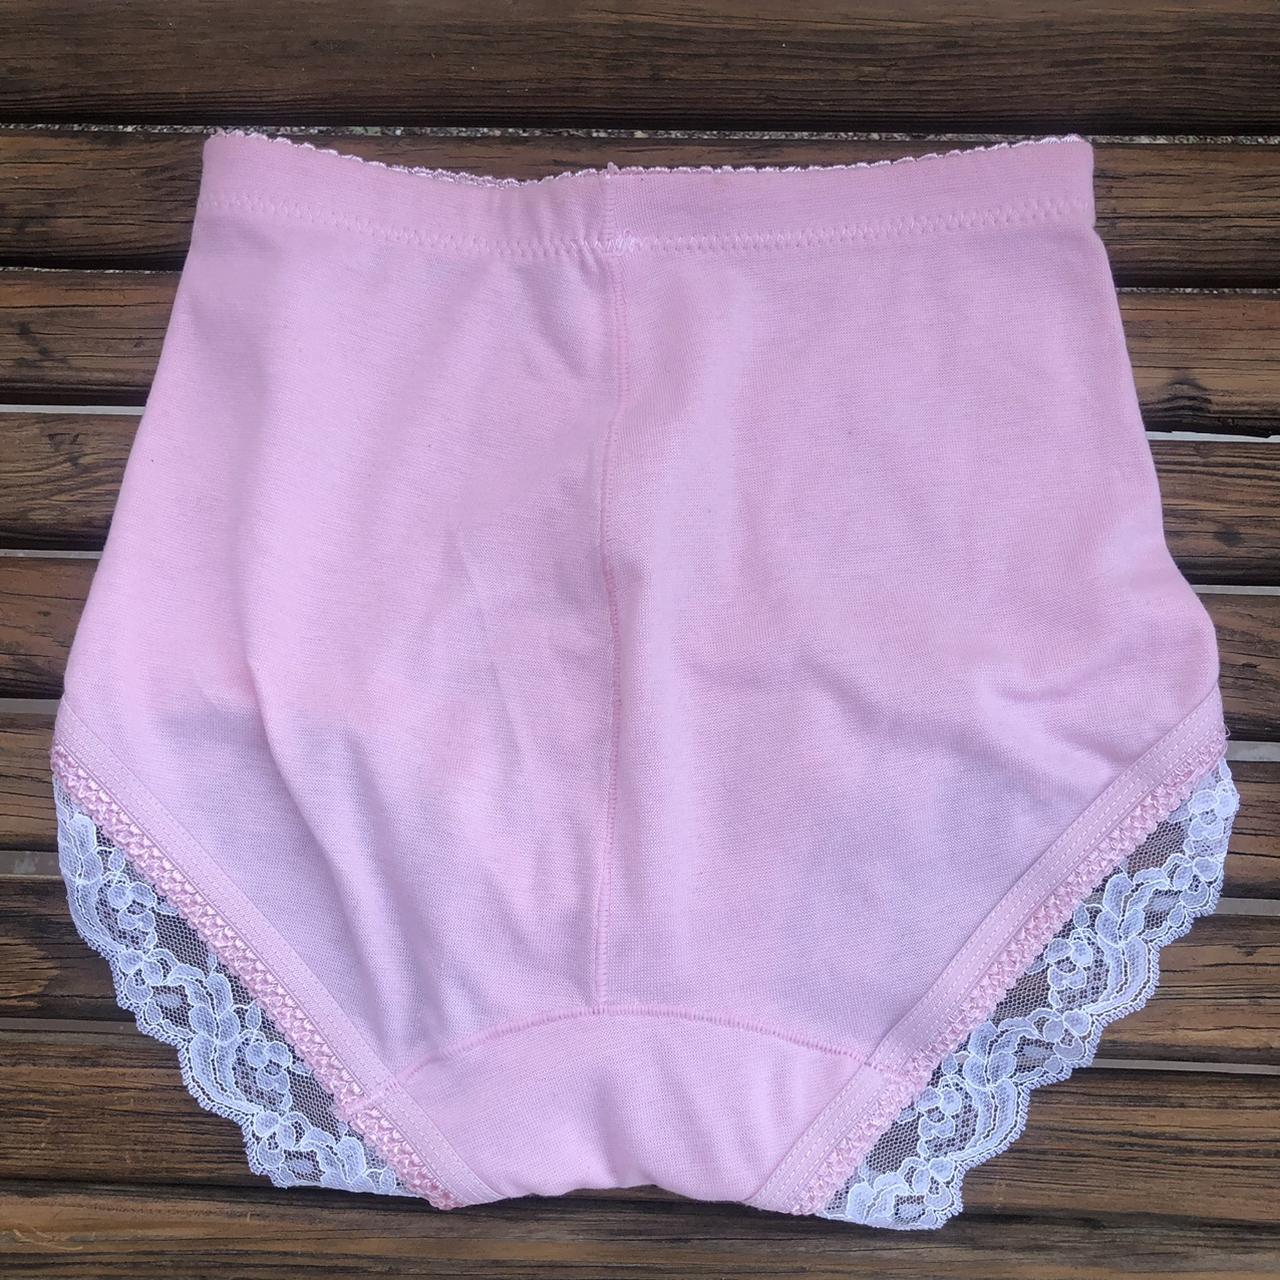 REPOP NWOT Hello Kitty Panties. Handmade. New Pink